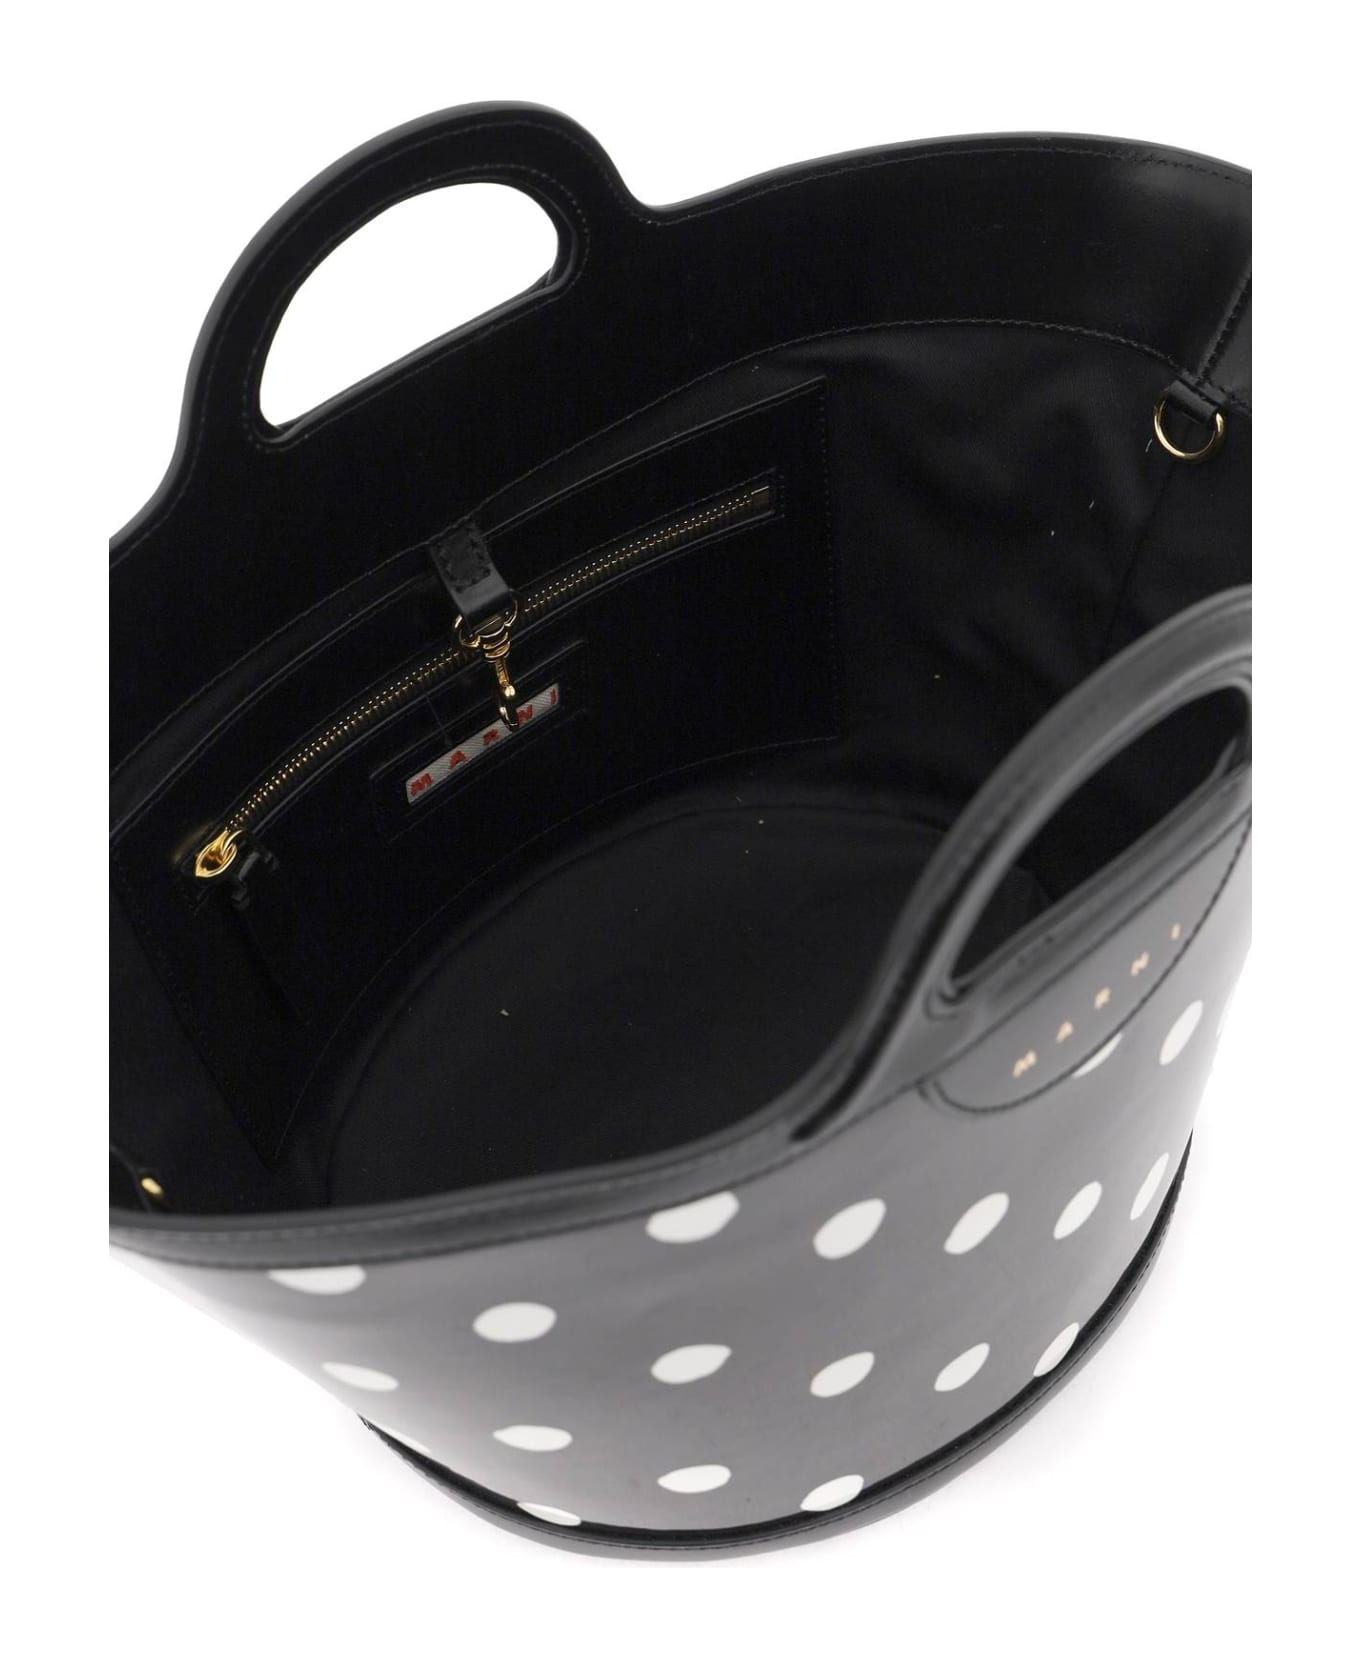 Marni Patent Leather Tropicalia Bucket Bag With Polka-dot Pattern - BLACK LILY WHITE (Black)